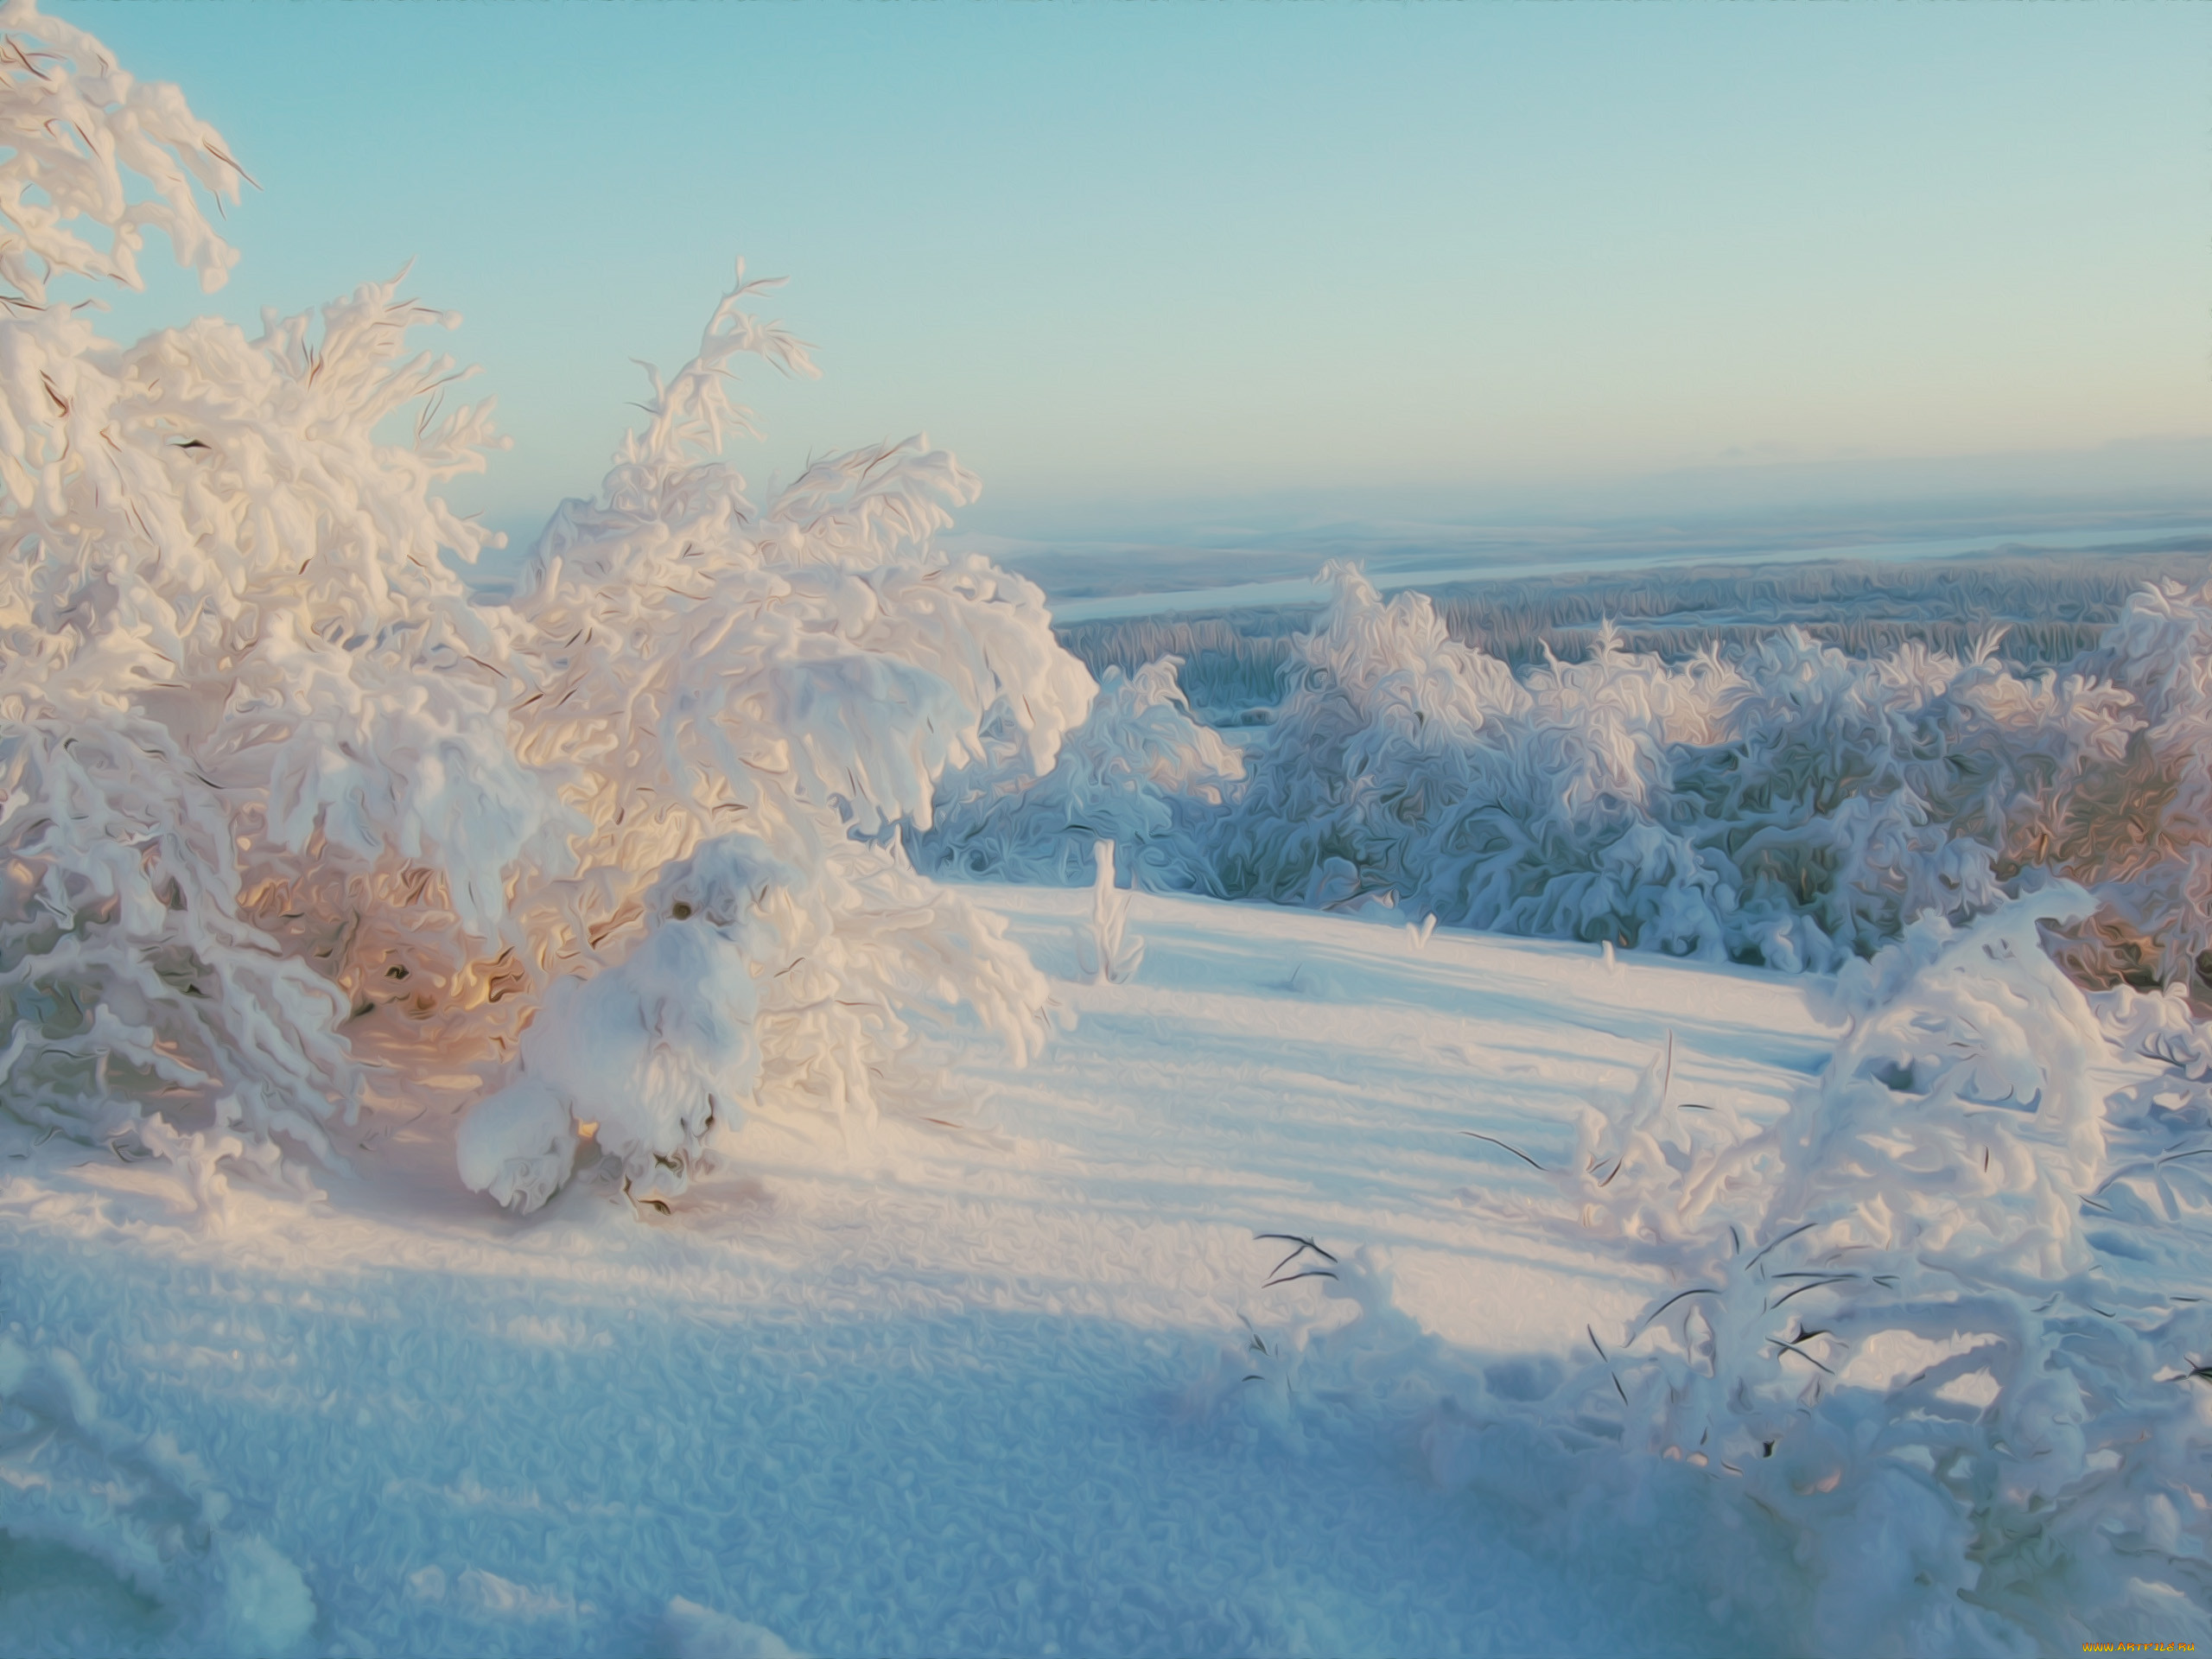 Название фото зима. Евгений Евтушенко третий снег. Евгений Евтушенко идут белые снеги. Зимний пейзаж. Красивая зима.